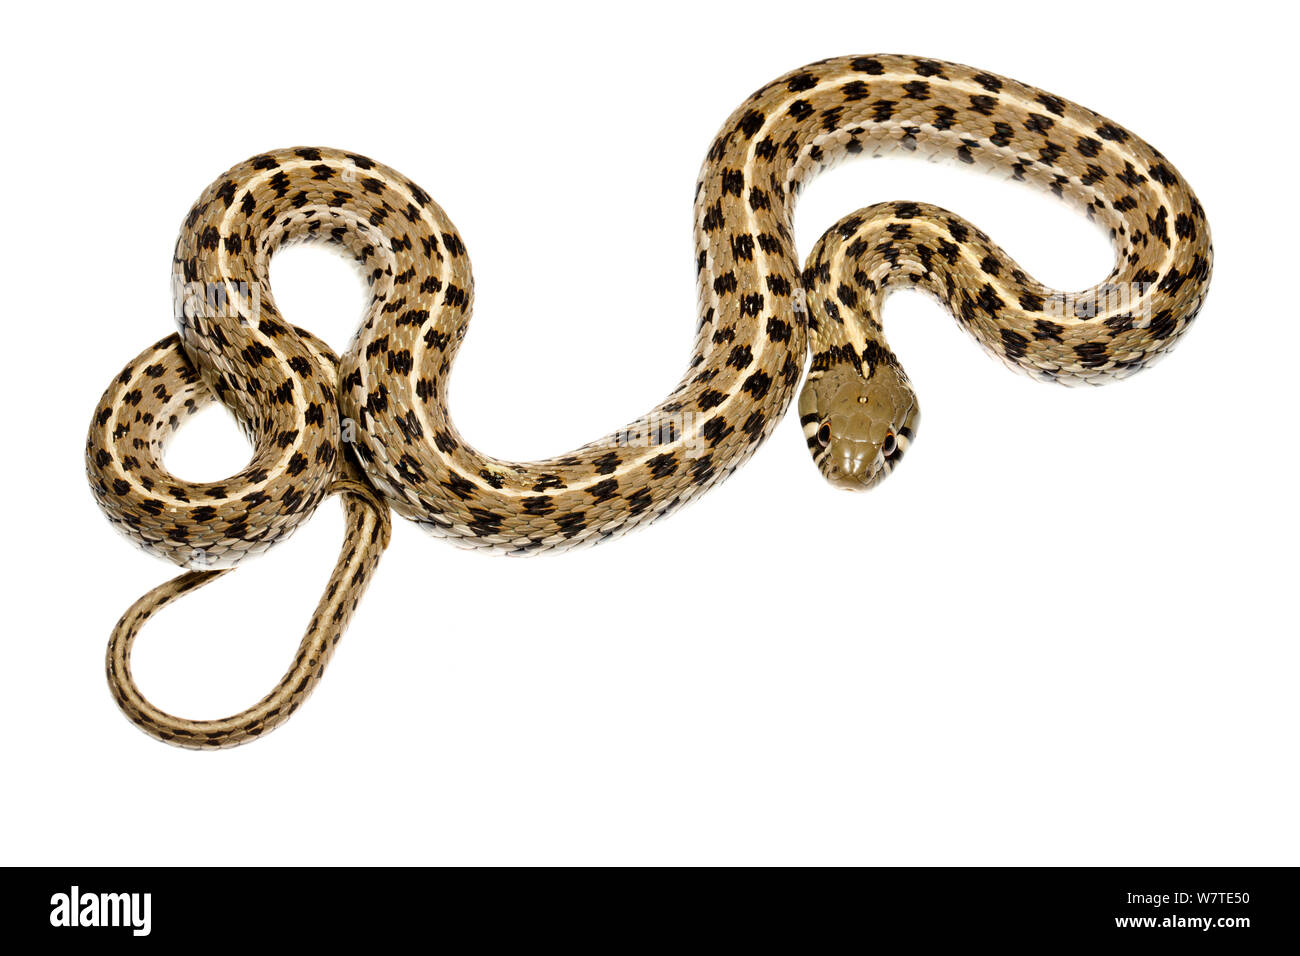 Giarrettiera a scacchi snake (Thamnophis marcianus) Texas, USA, maggio. Progetto Meetyourneighbors.net. Foto Stock